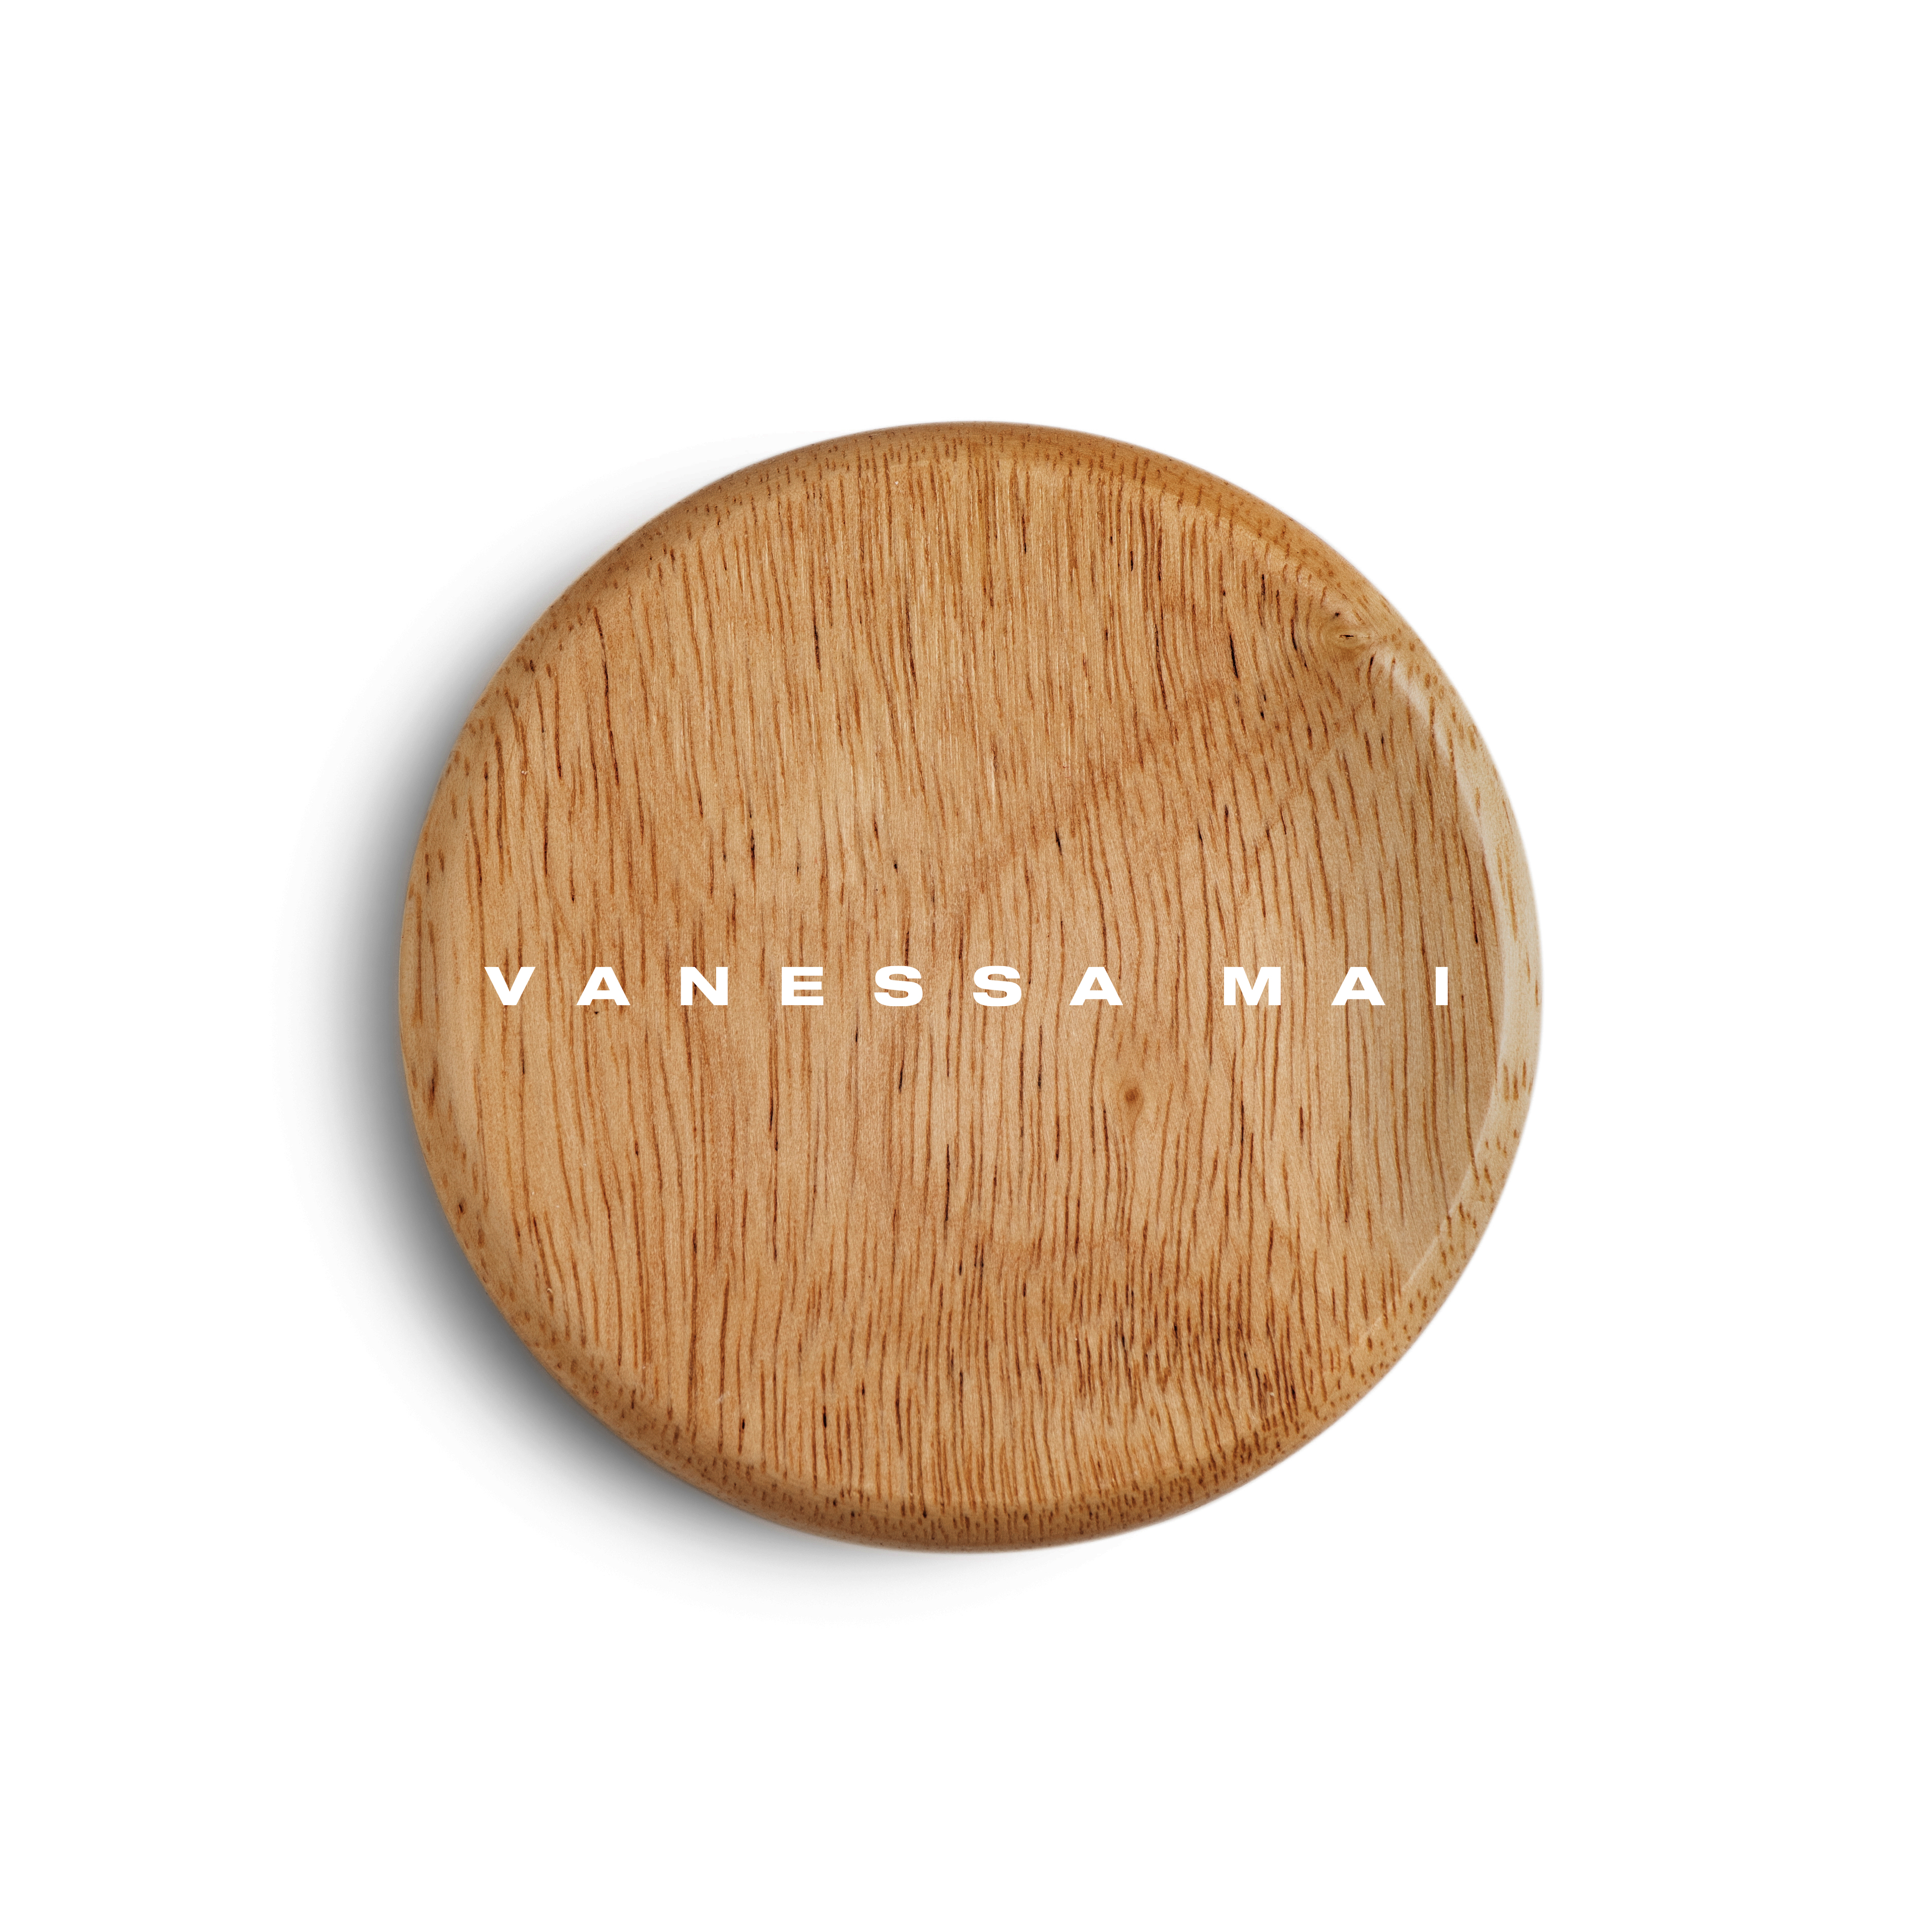 (Box) Vanessa - Metamorphose - (CD) Mai